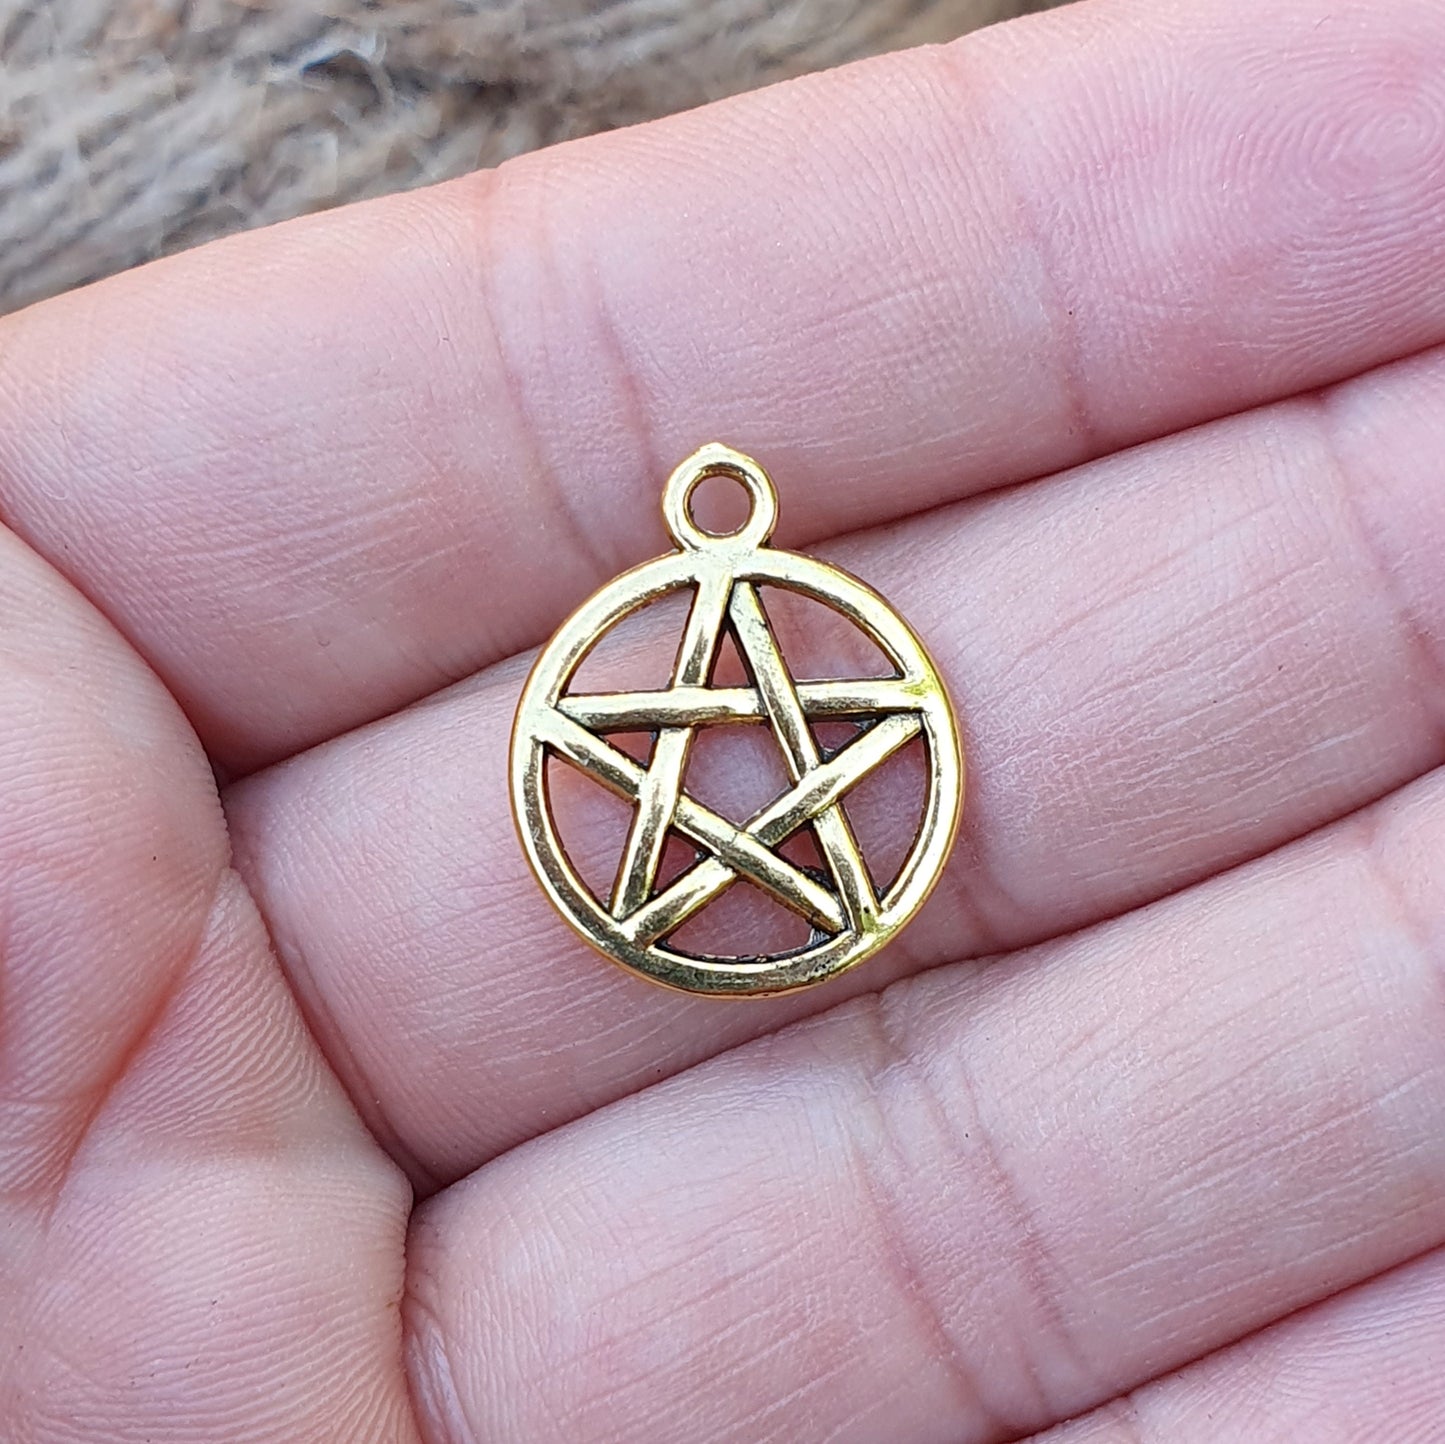 3 Anhänger Pentagramm in antik goldfarbig, 20mm, Wicca, Pagan